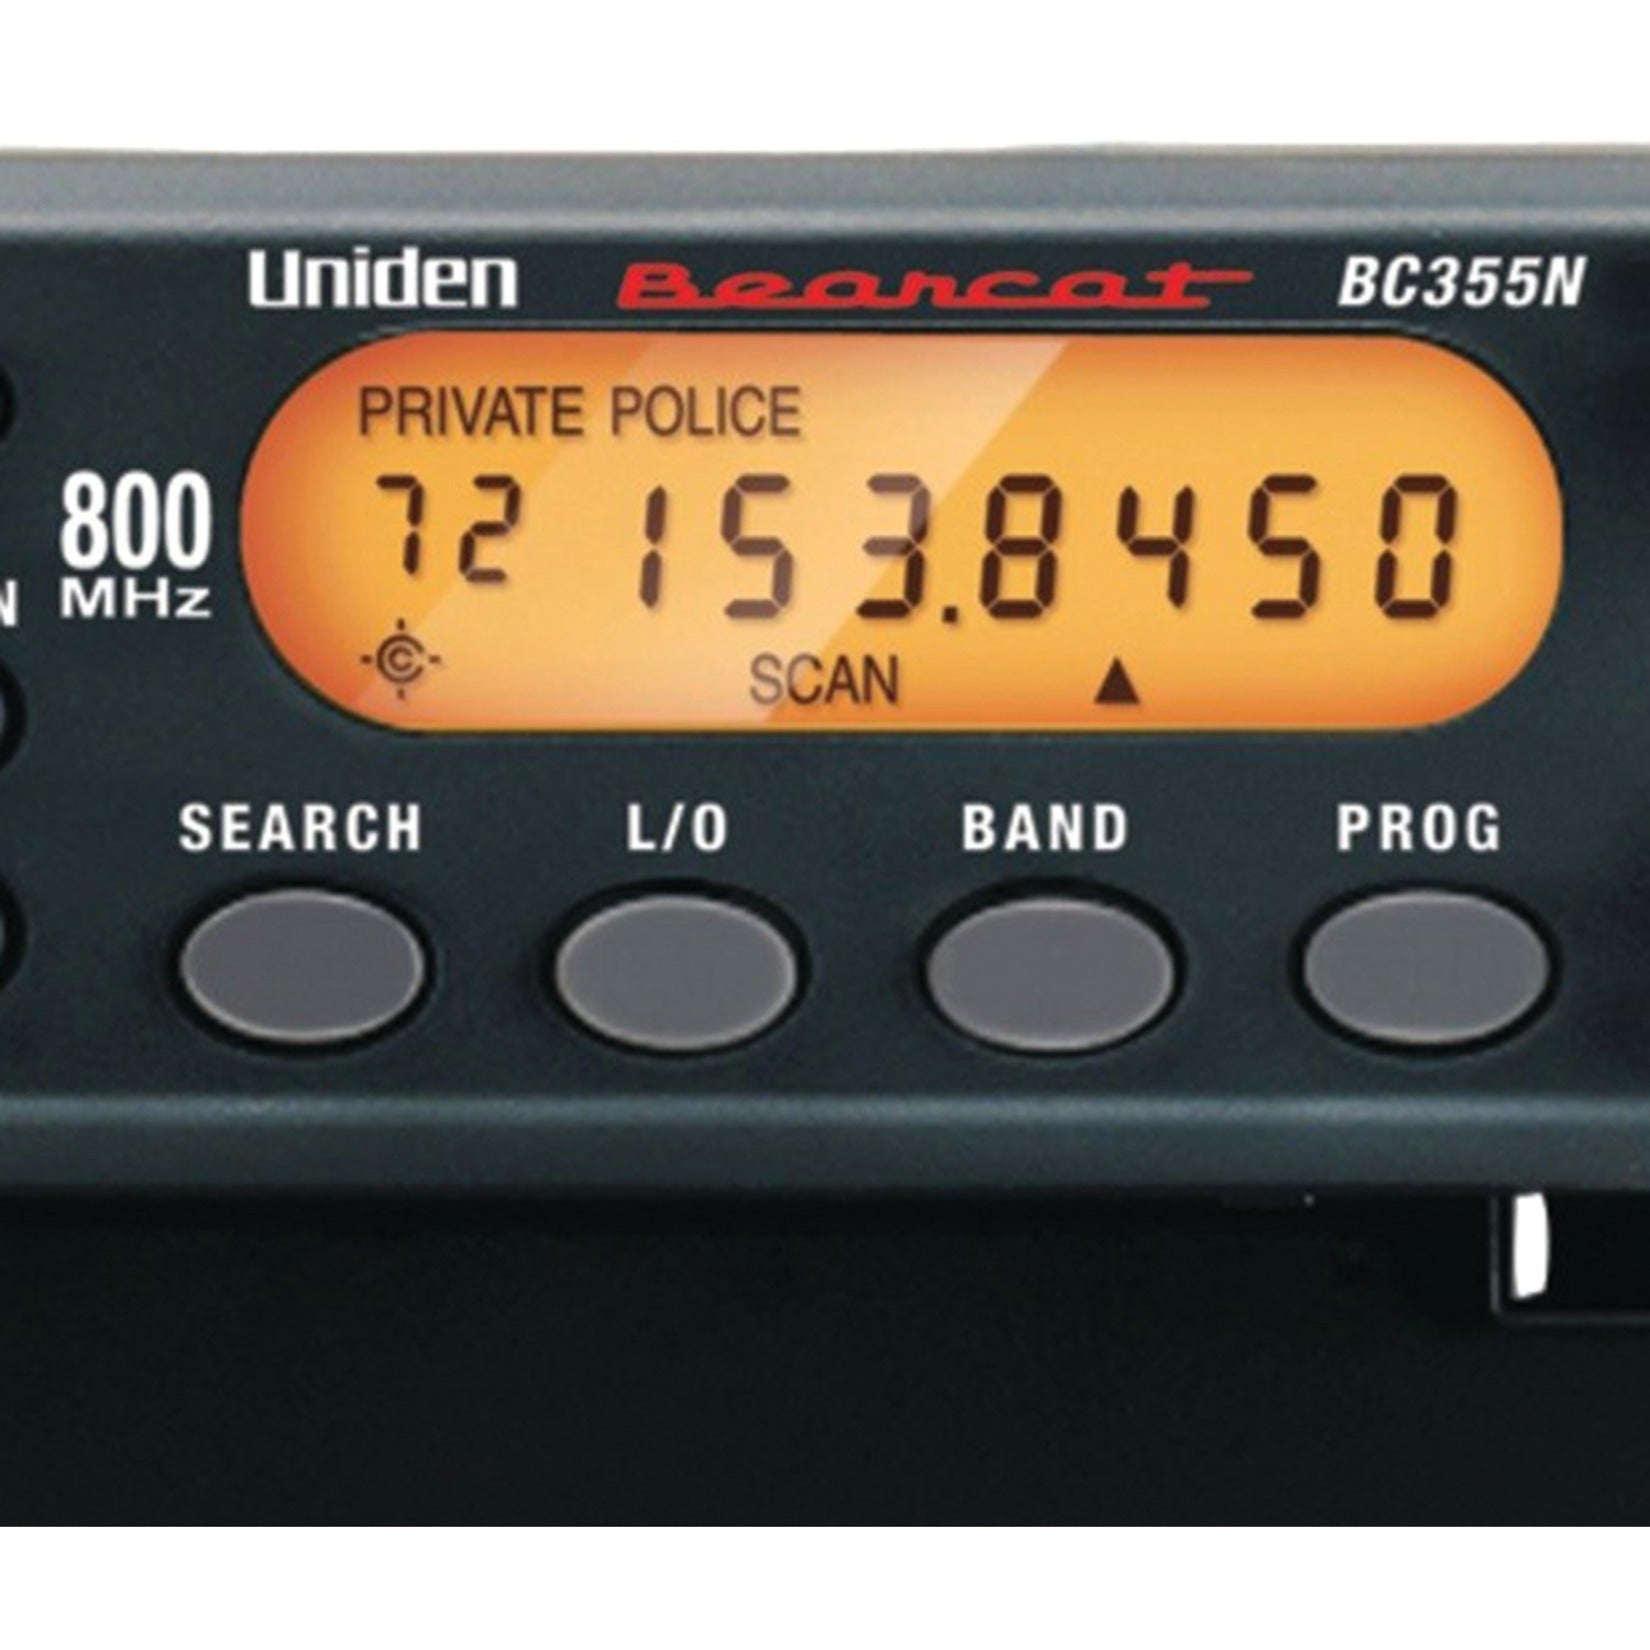 Uniden BC355N 800 MHz Bearcat Base / Mobile Scanner with Narrowband Compatibility, 300 Channels, Orange Backlit LCD Display